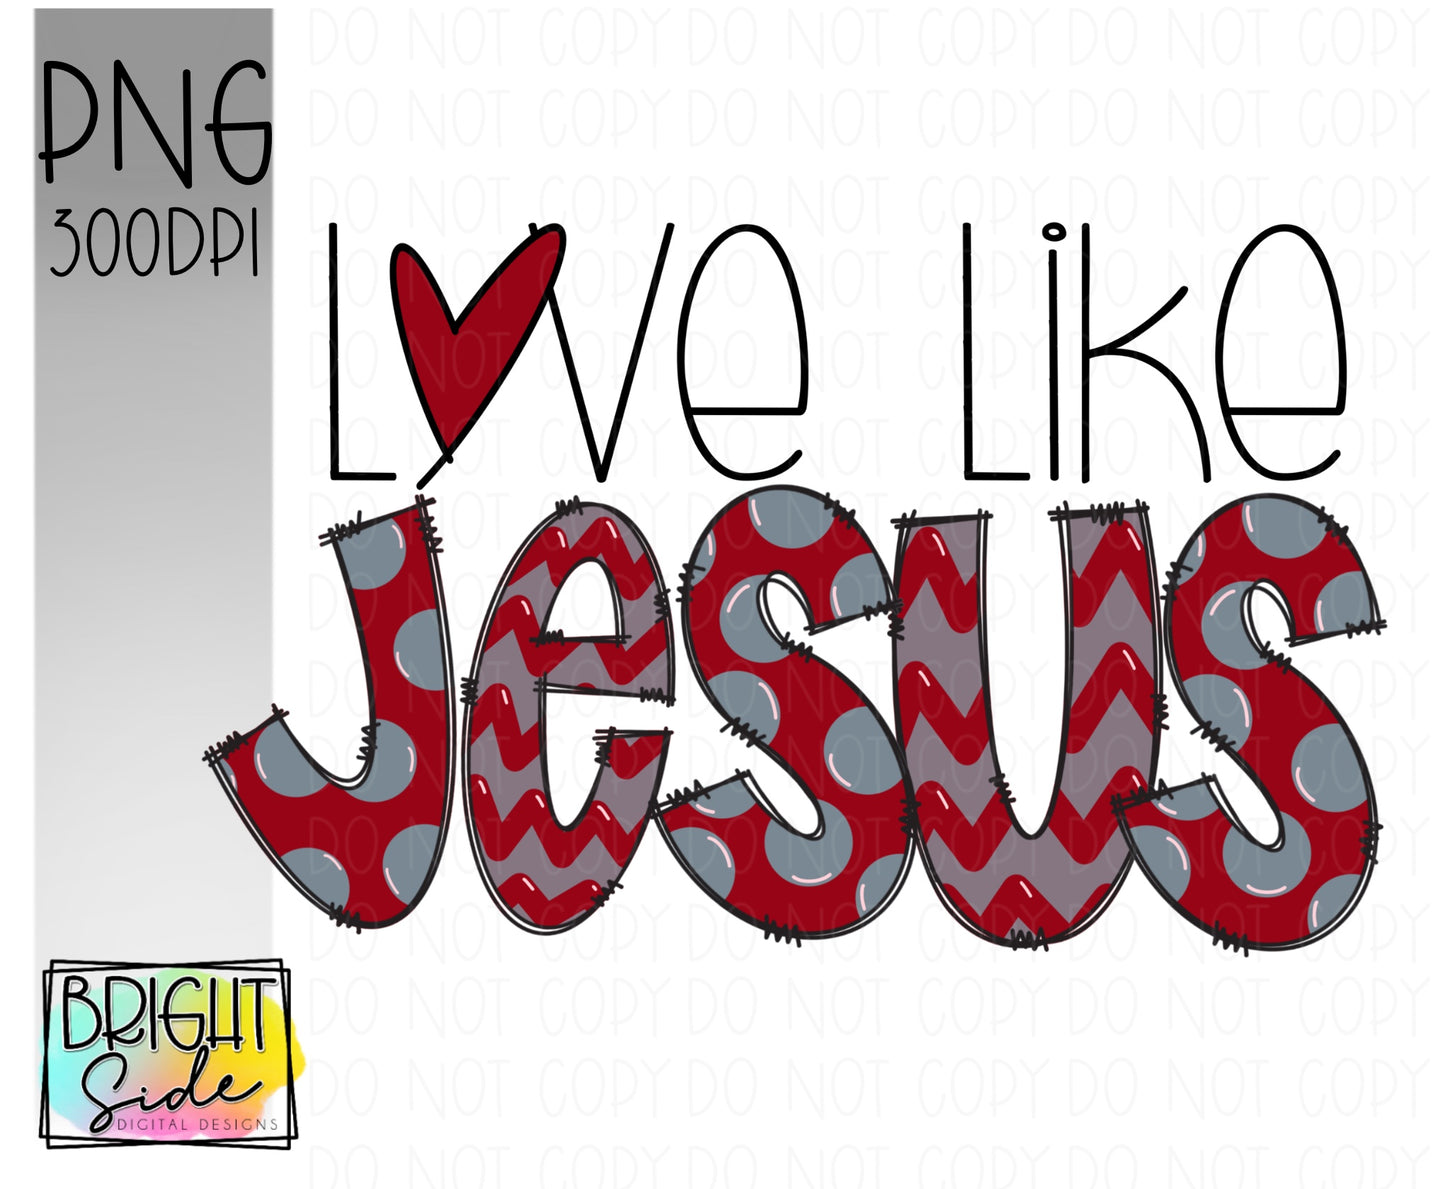 Love like Jesus PNG